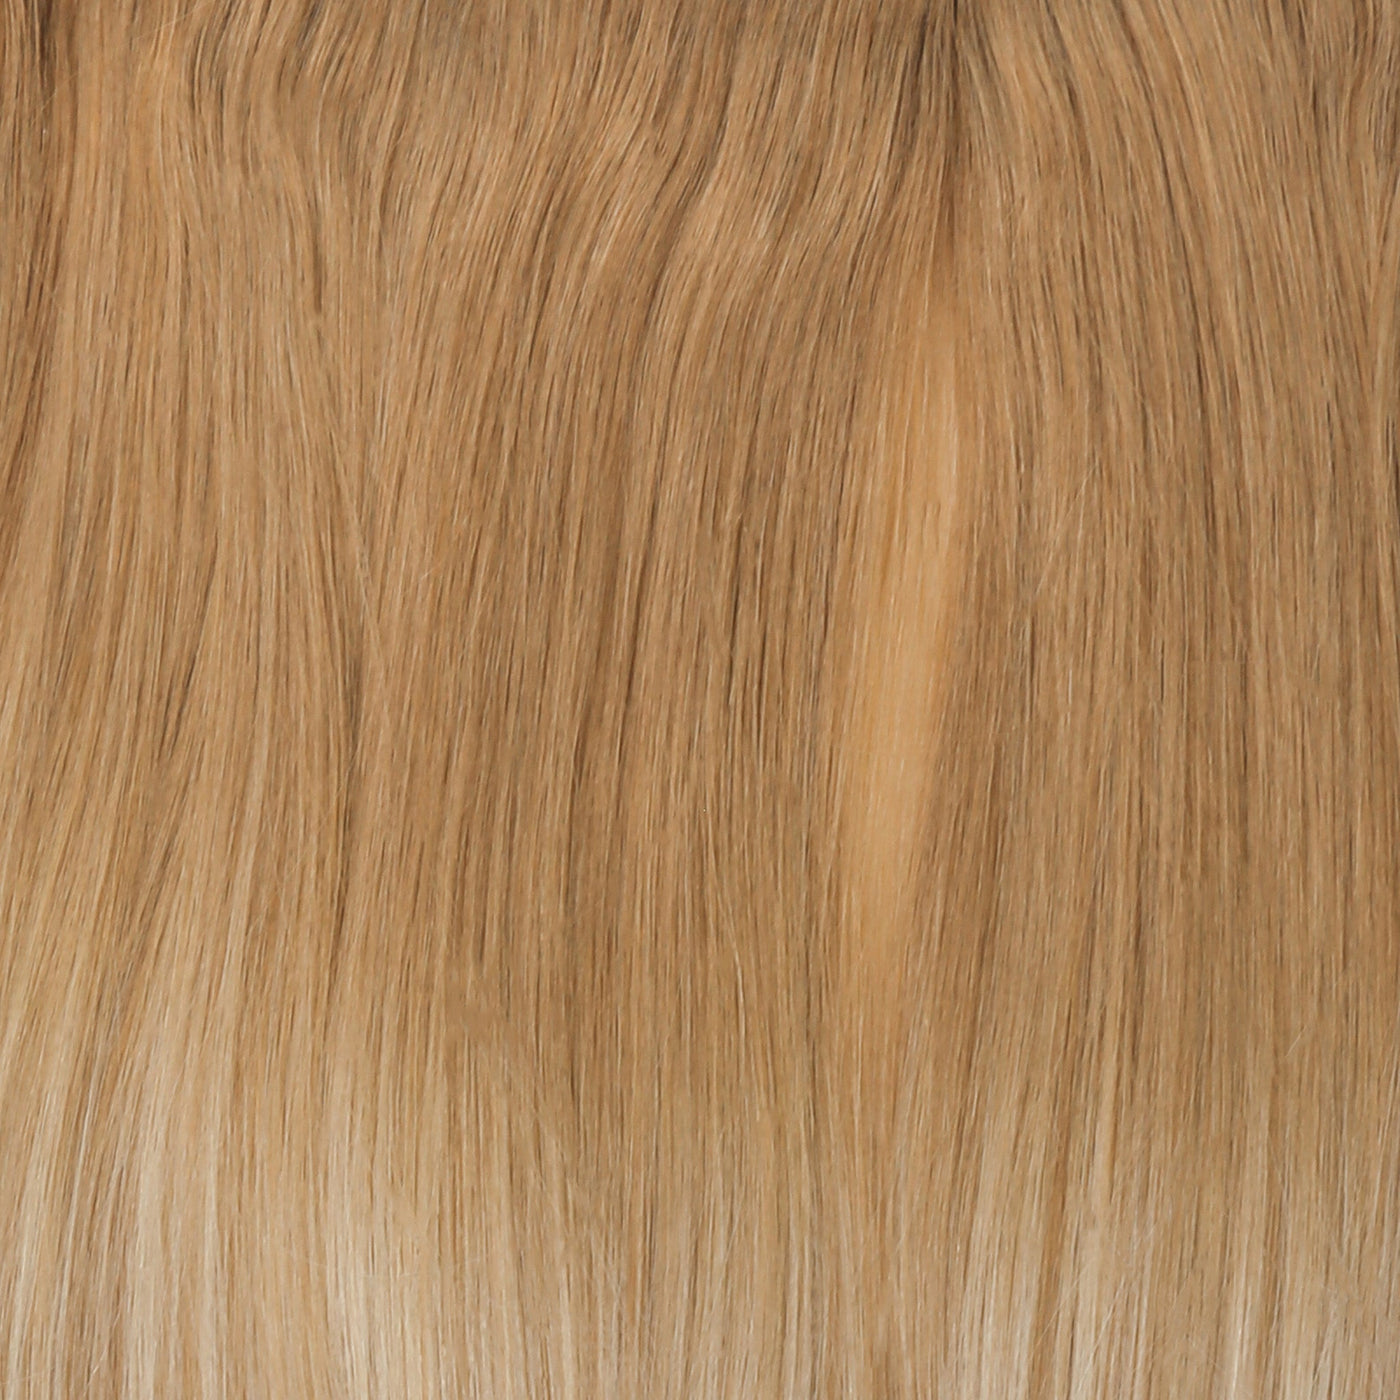 #18/22 Balayage AquaLyna Ponytail Hair Extension